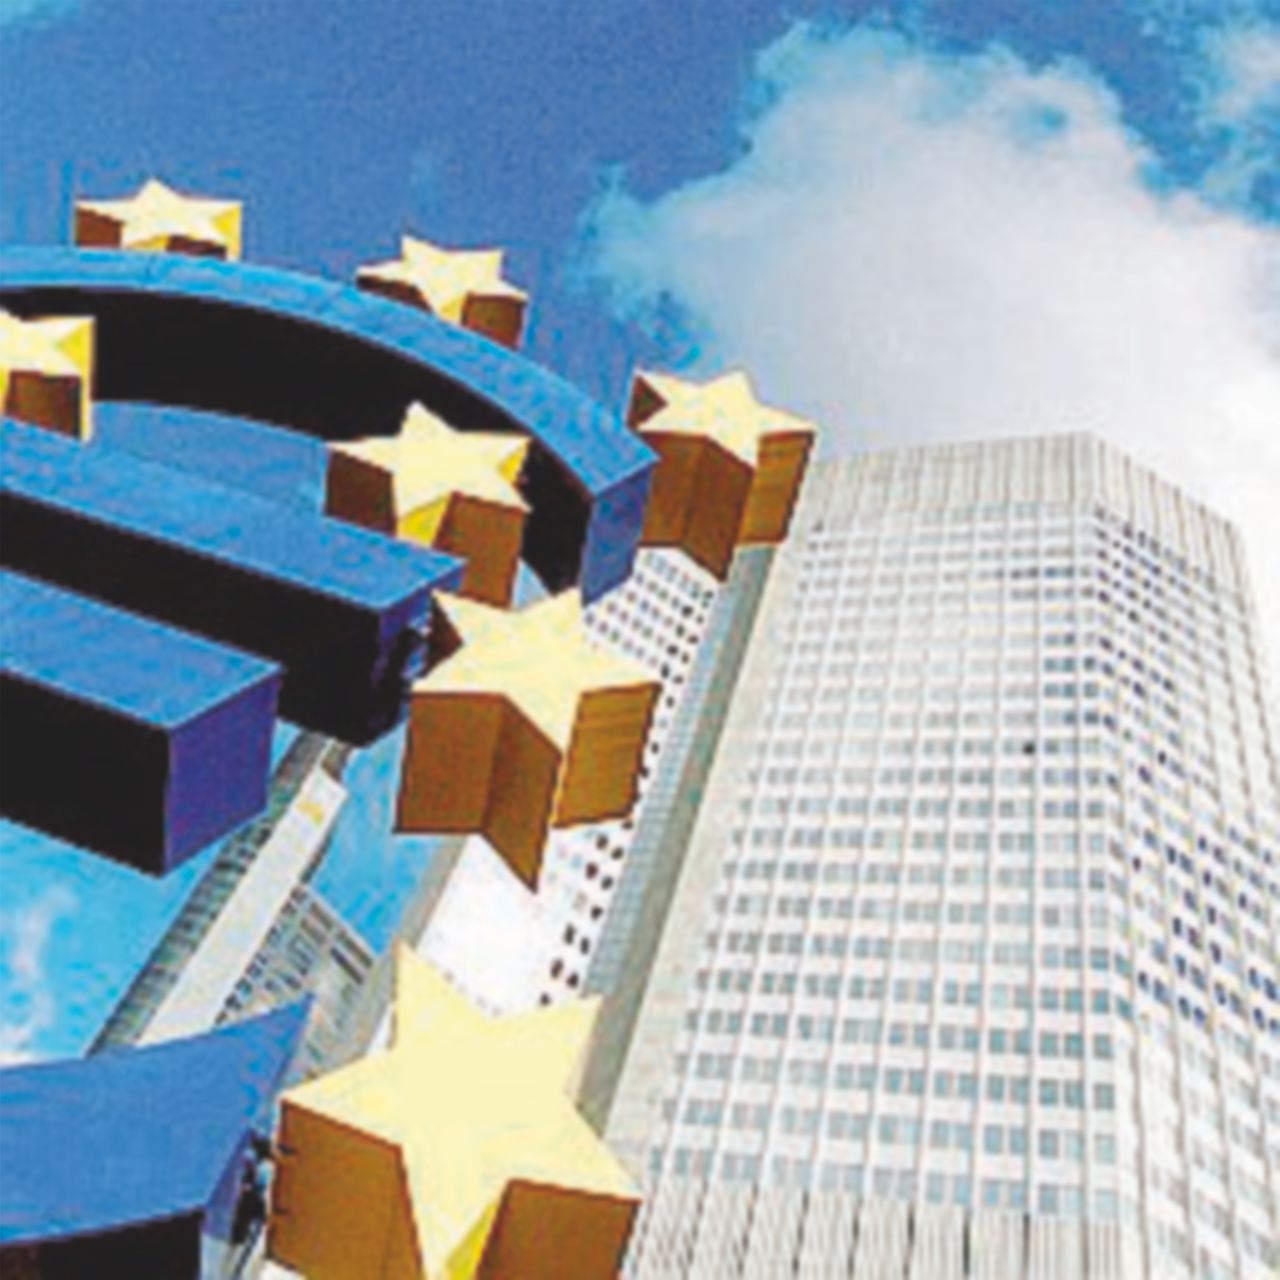 Copertina di Crediti bolliti, Nouy (Bce) apre a una stretta meno drastica